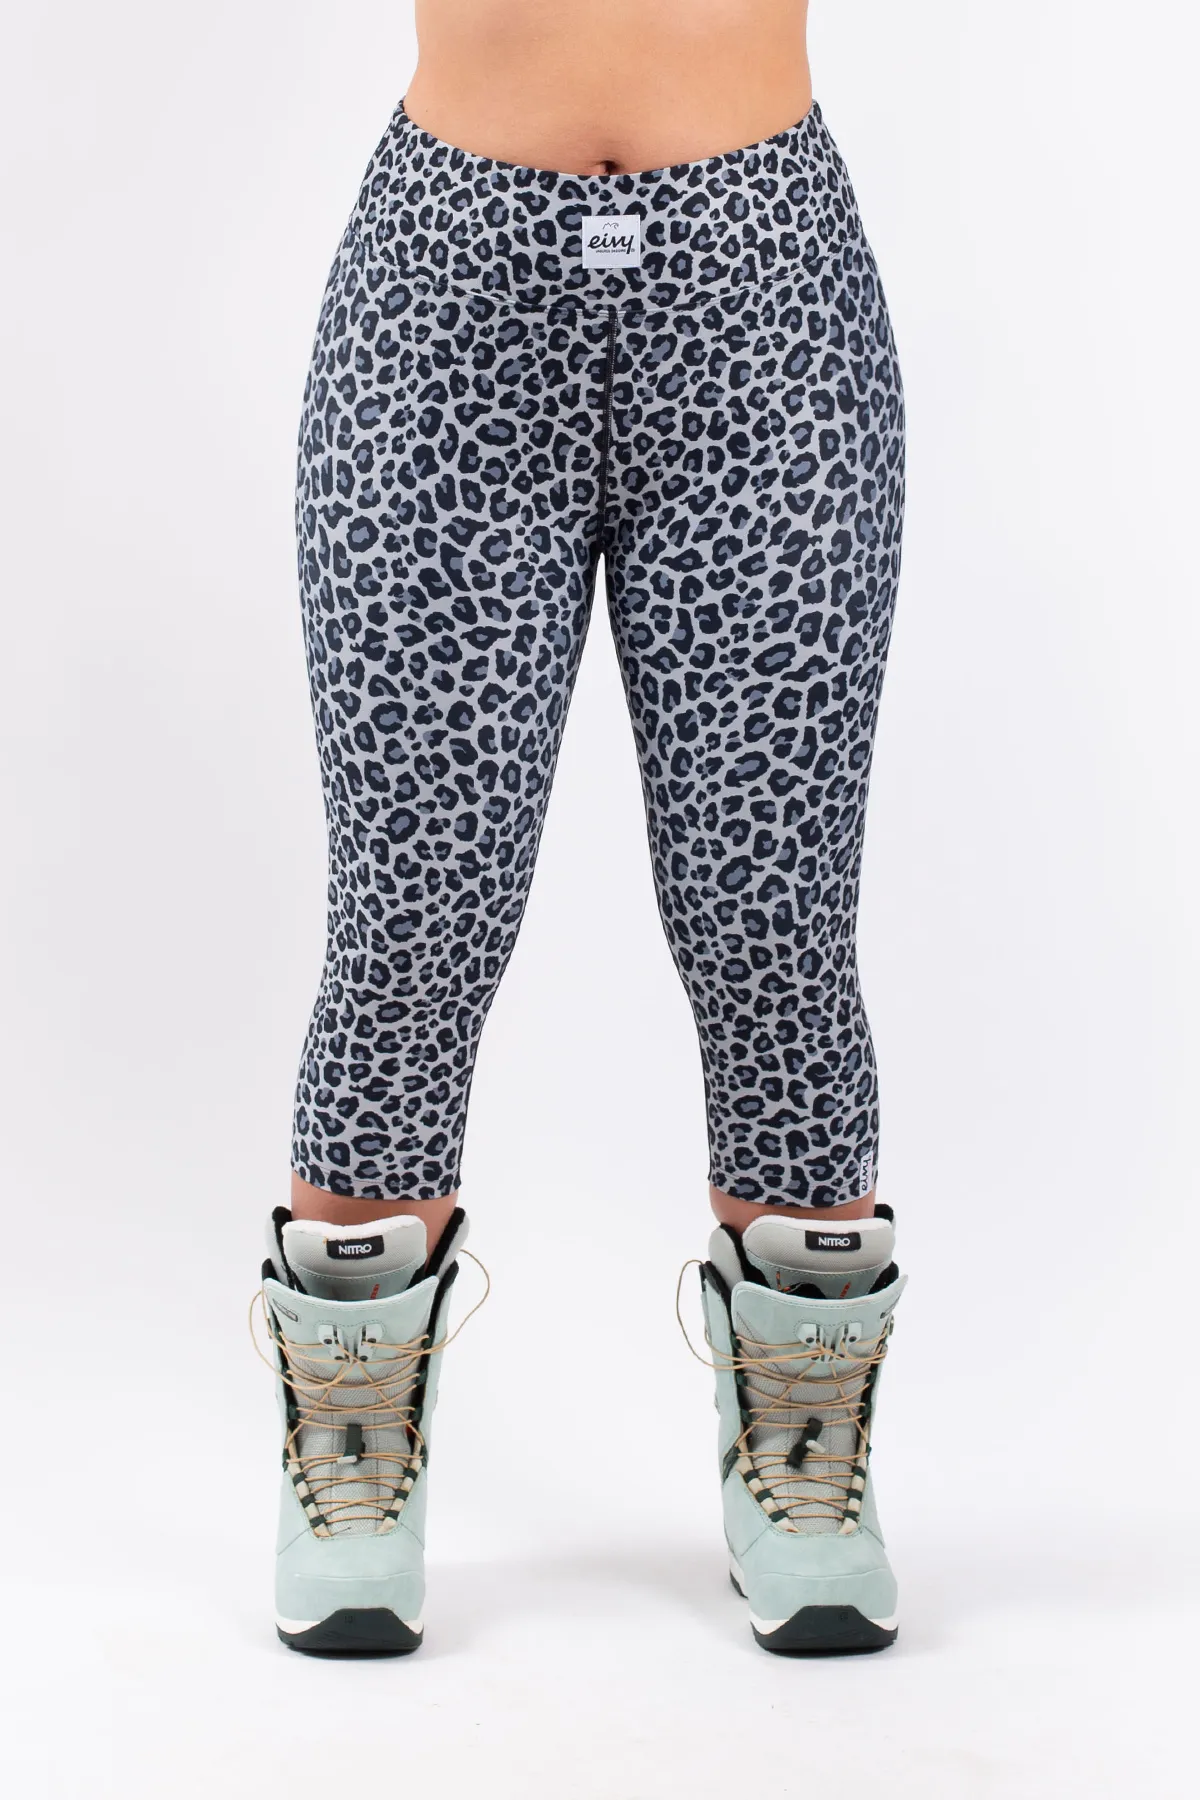 Niki - Winter Leopards - Organic leggings with snow leopard print